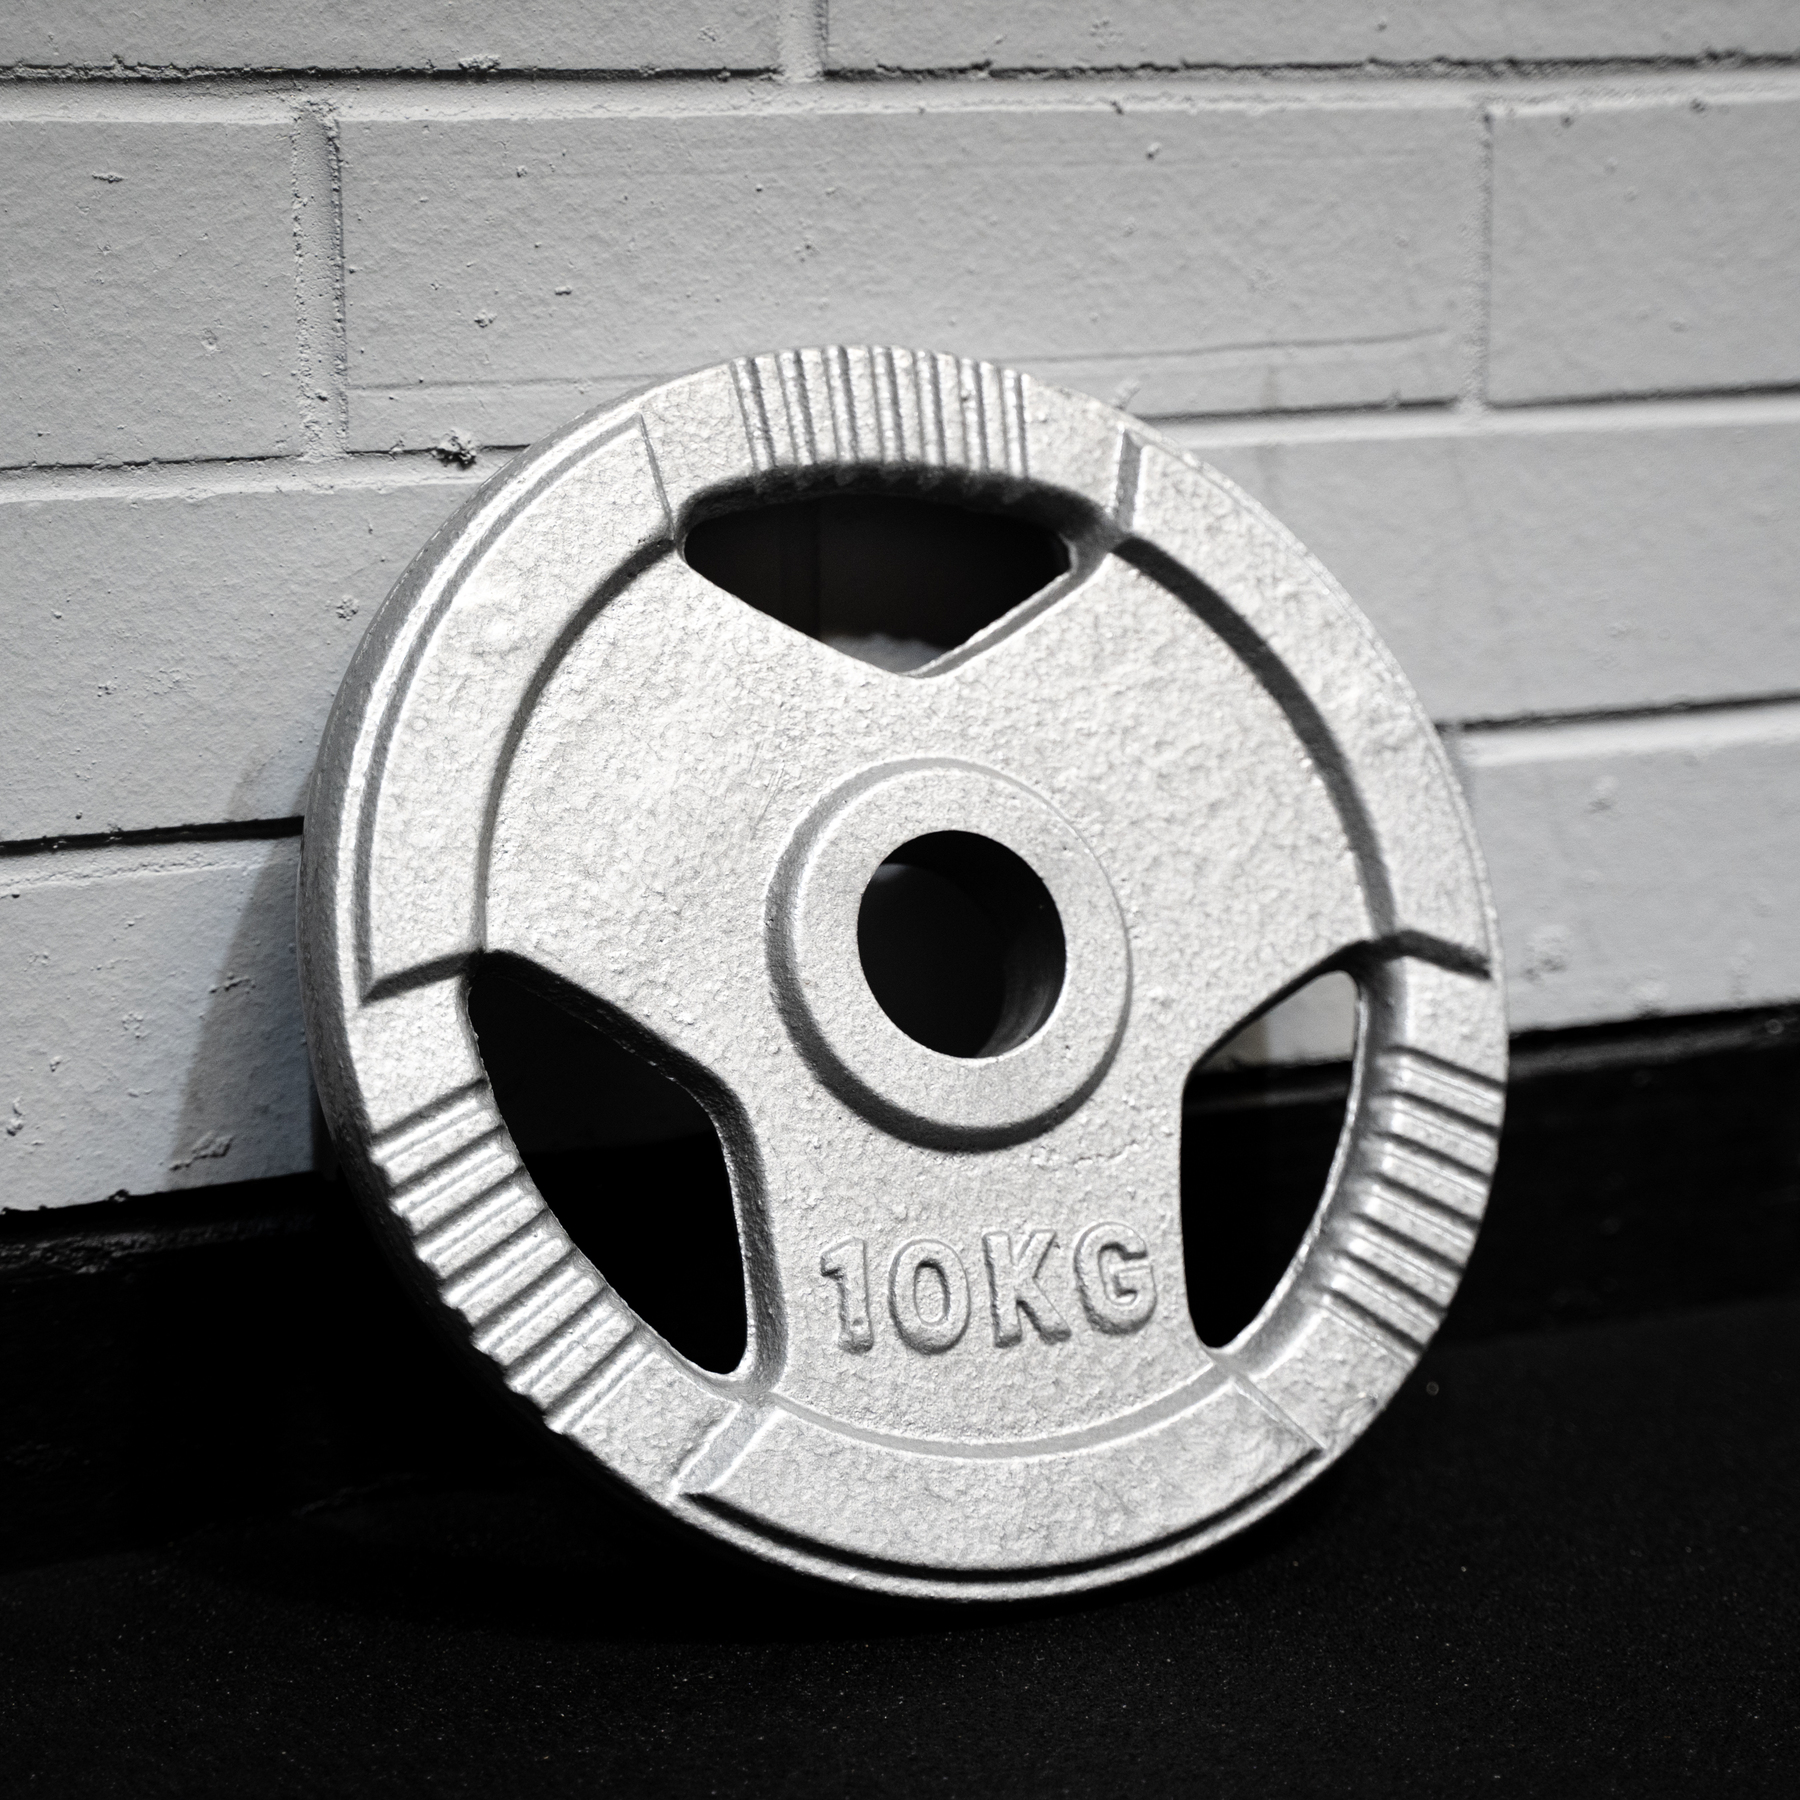 Olympic Hammer tone Plate Single 20KG